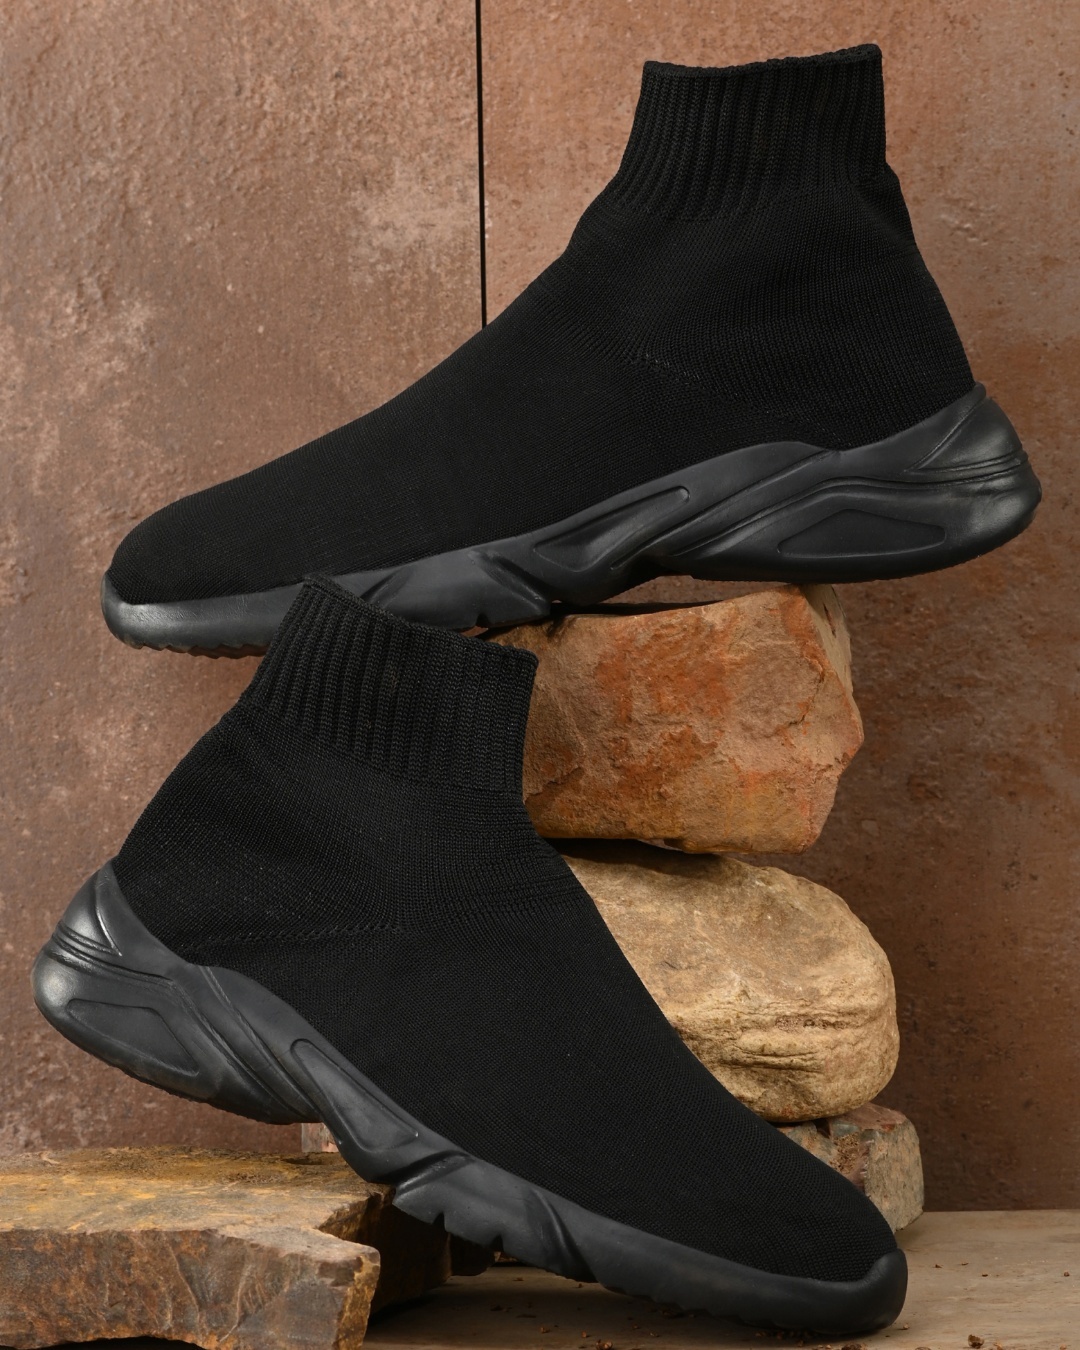 Men's Black High Top Boots